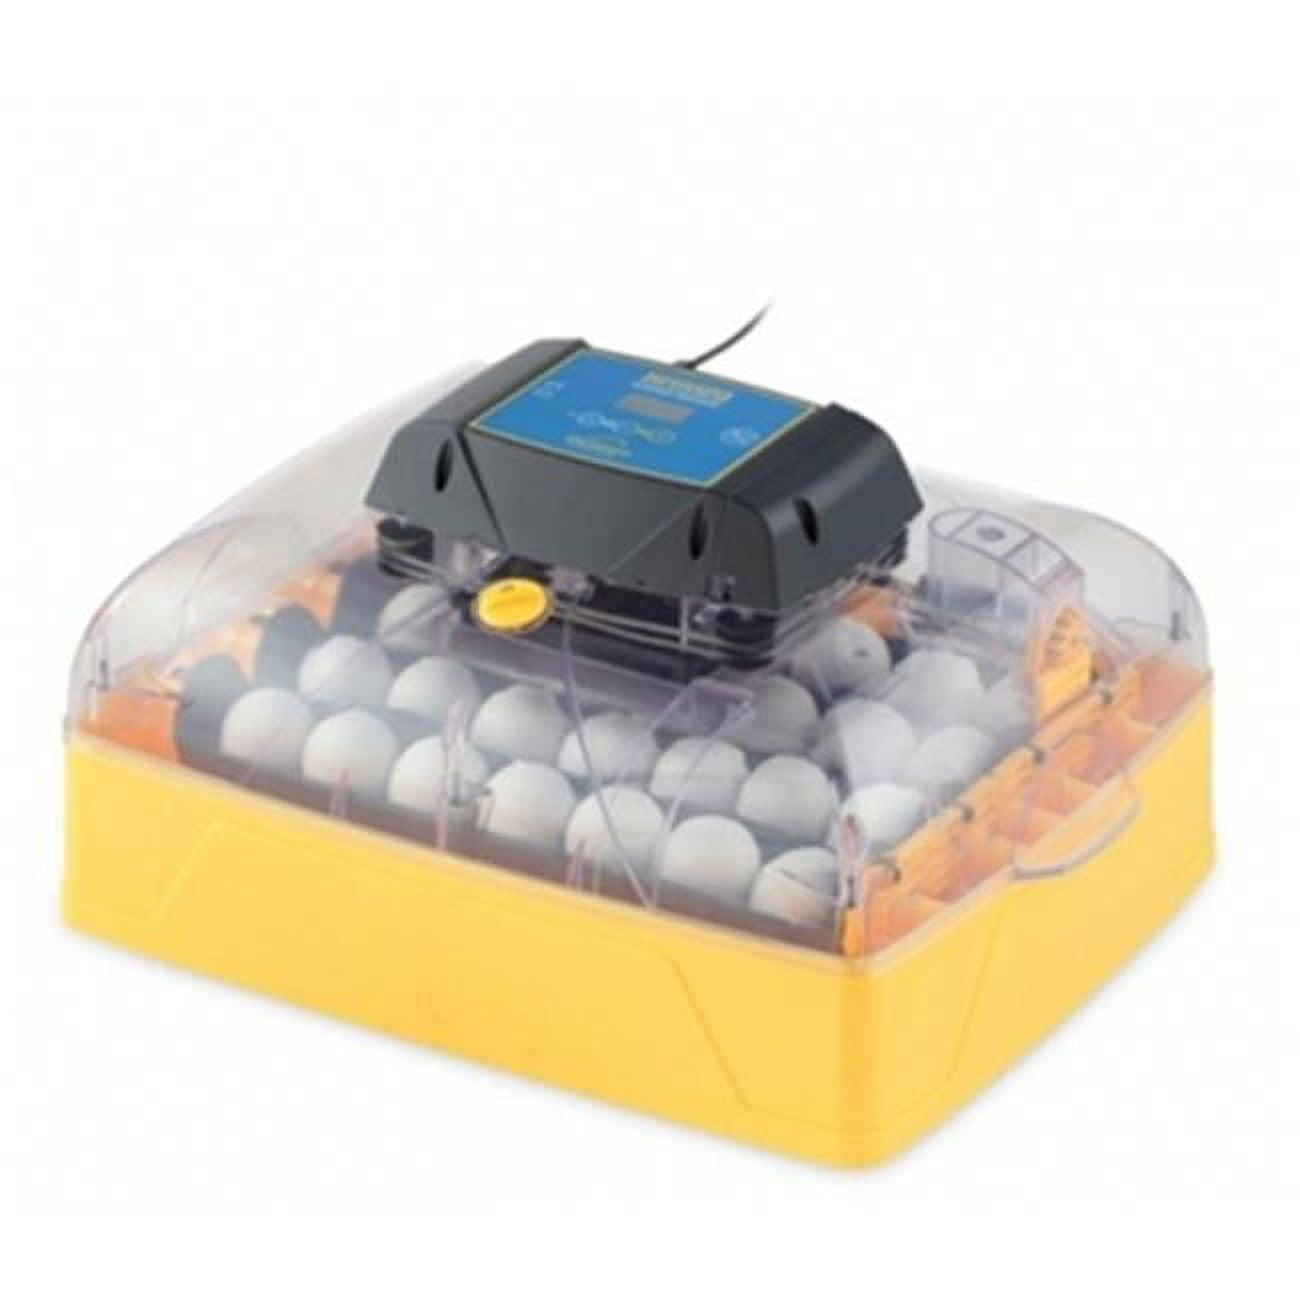 Brinsea Products Usaf36cp 115v Ovation 28 Classroom Digital Egg Incubator